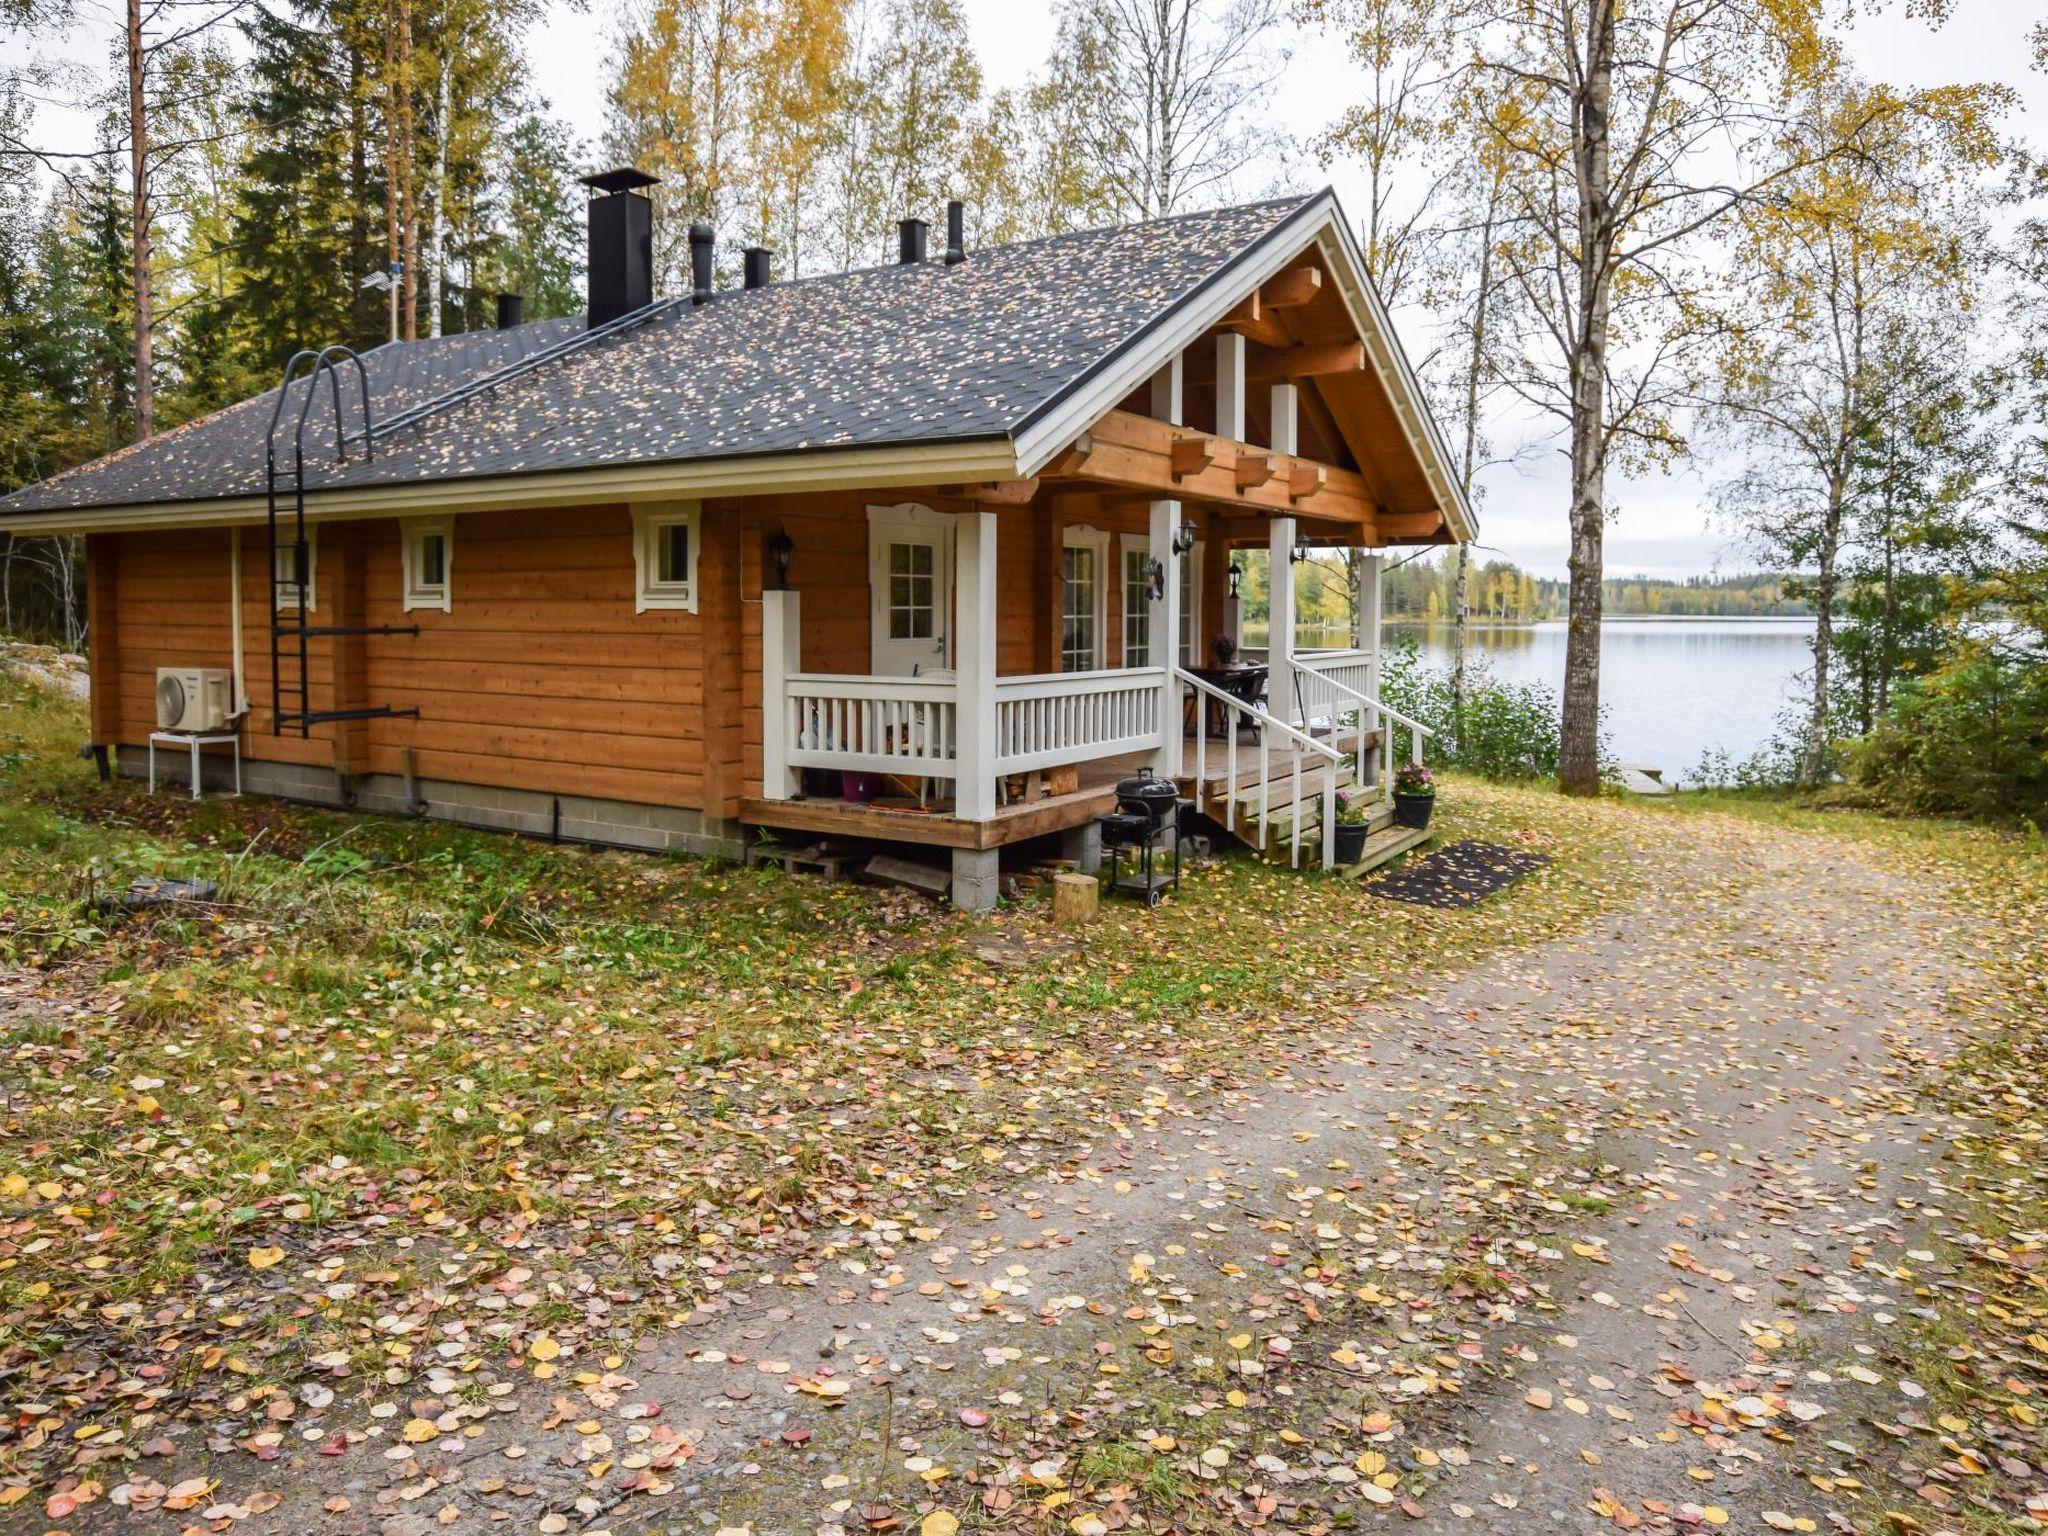 Photo 1 - 2 bedroom House in Mikkeli with sauna